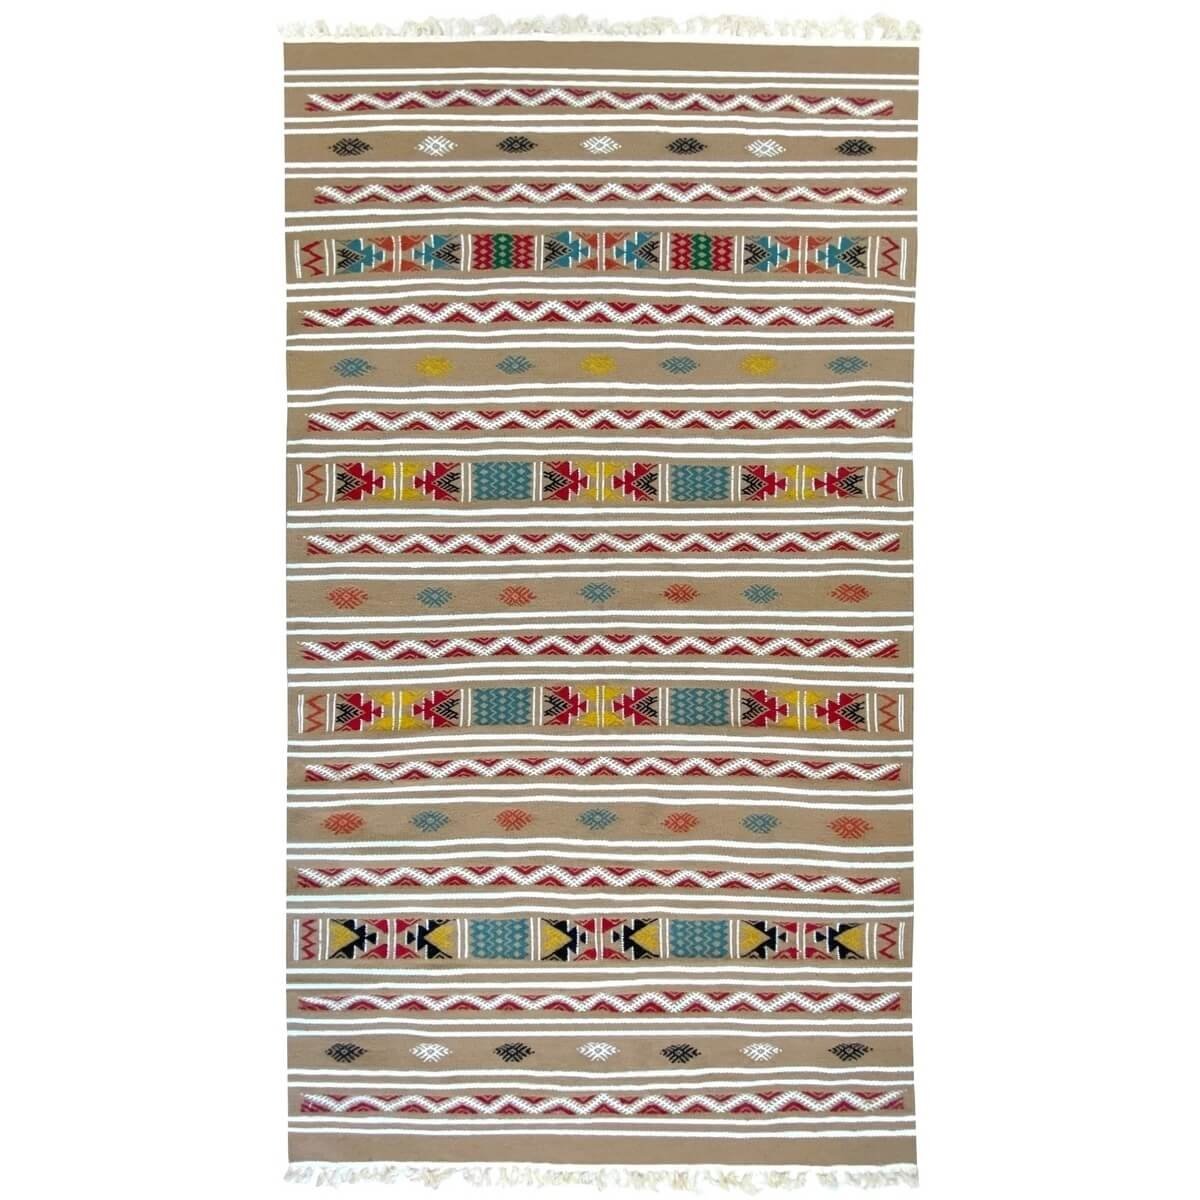 Berber carpet Rug Kilim Azel 115x215 Beige/Multicolour (Handmade, Wool) Tunisian Rug Kilim style Moroccan rug. Rectangular carpe